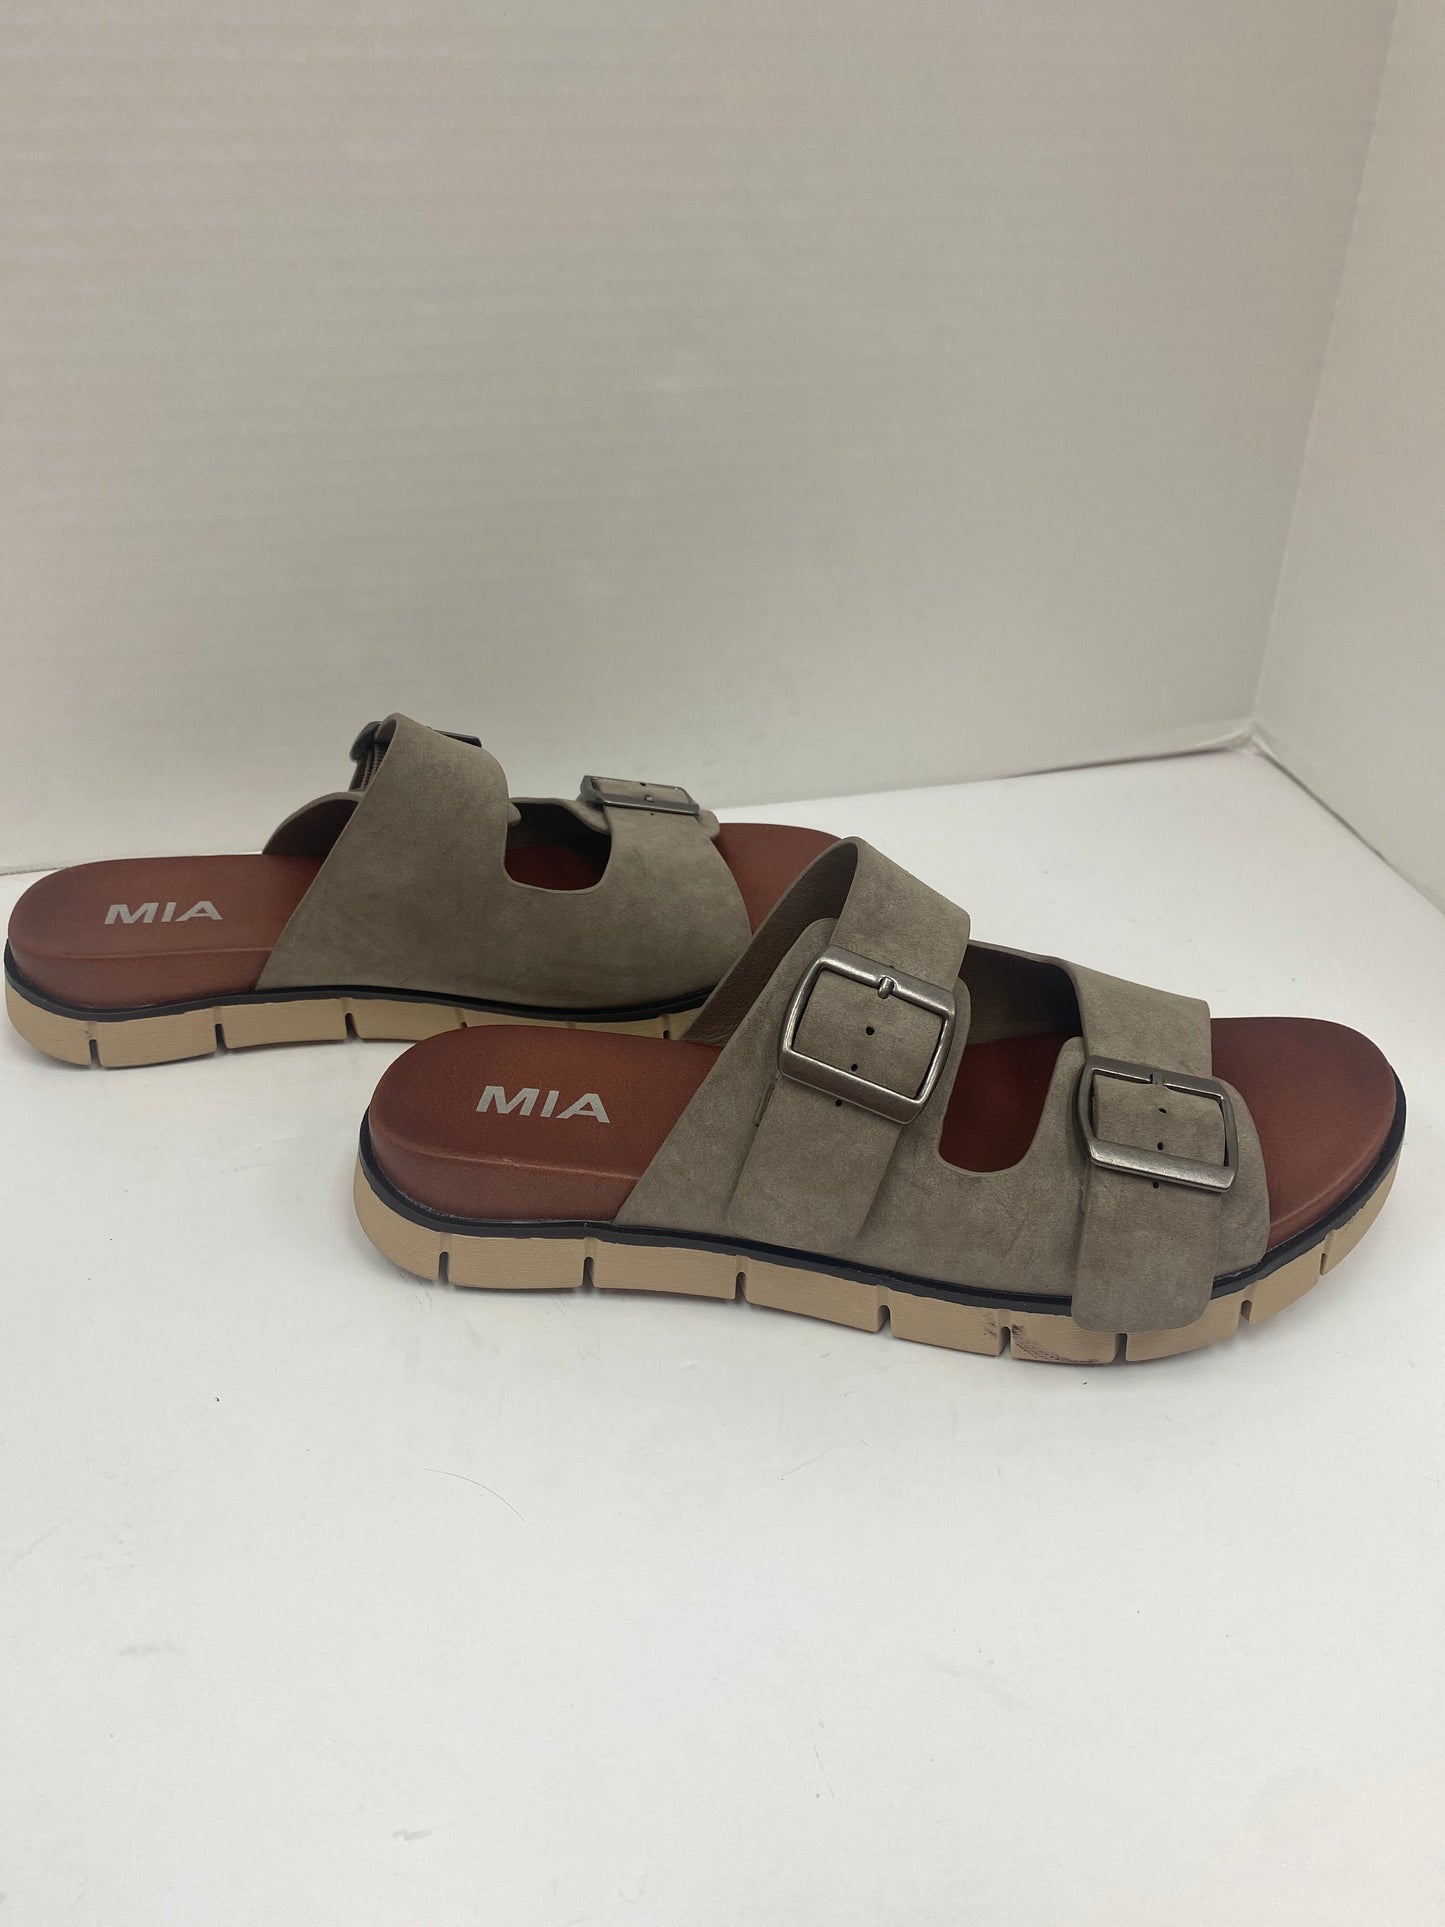 Grey Sandals Flats Mia, Size 7.5